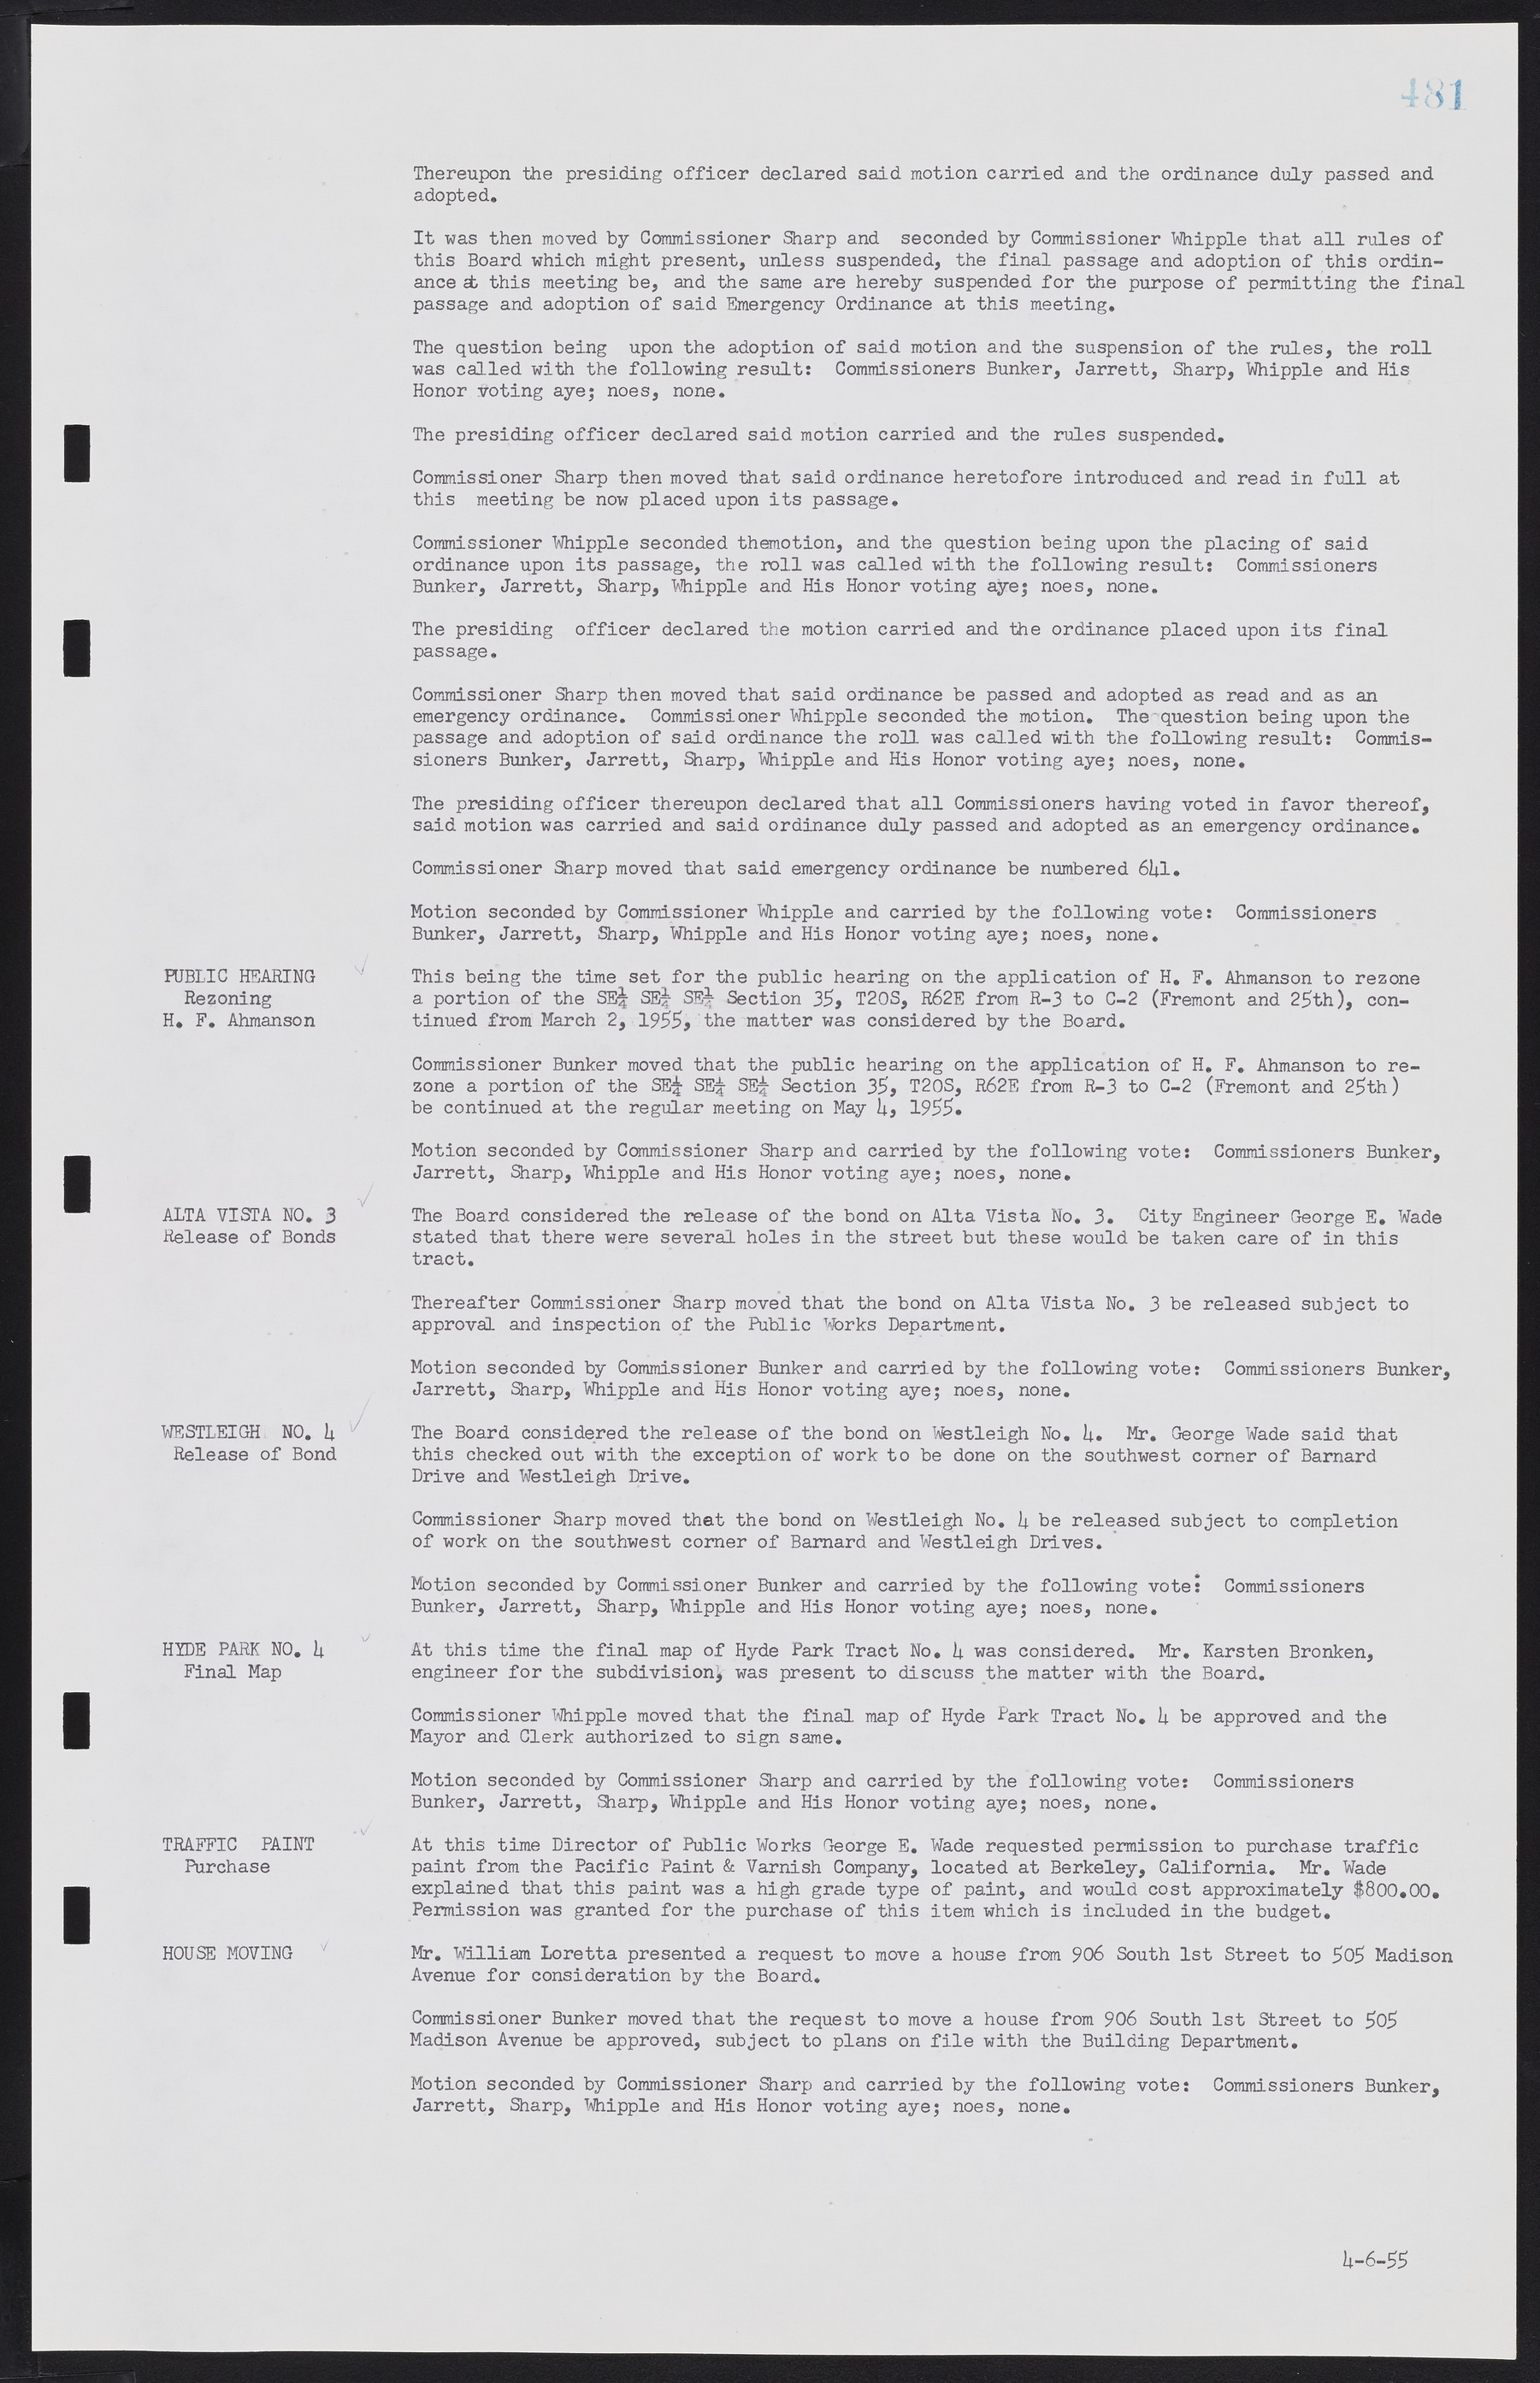 Las Vegas City Commission Minutes, February 17, 1954 to September 21, 1955, lvc000009-487